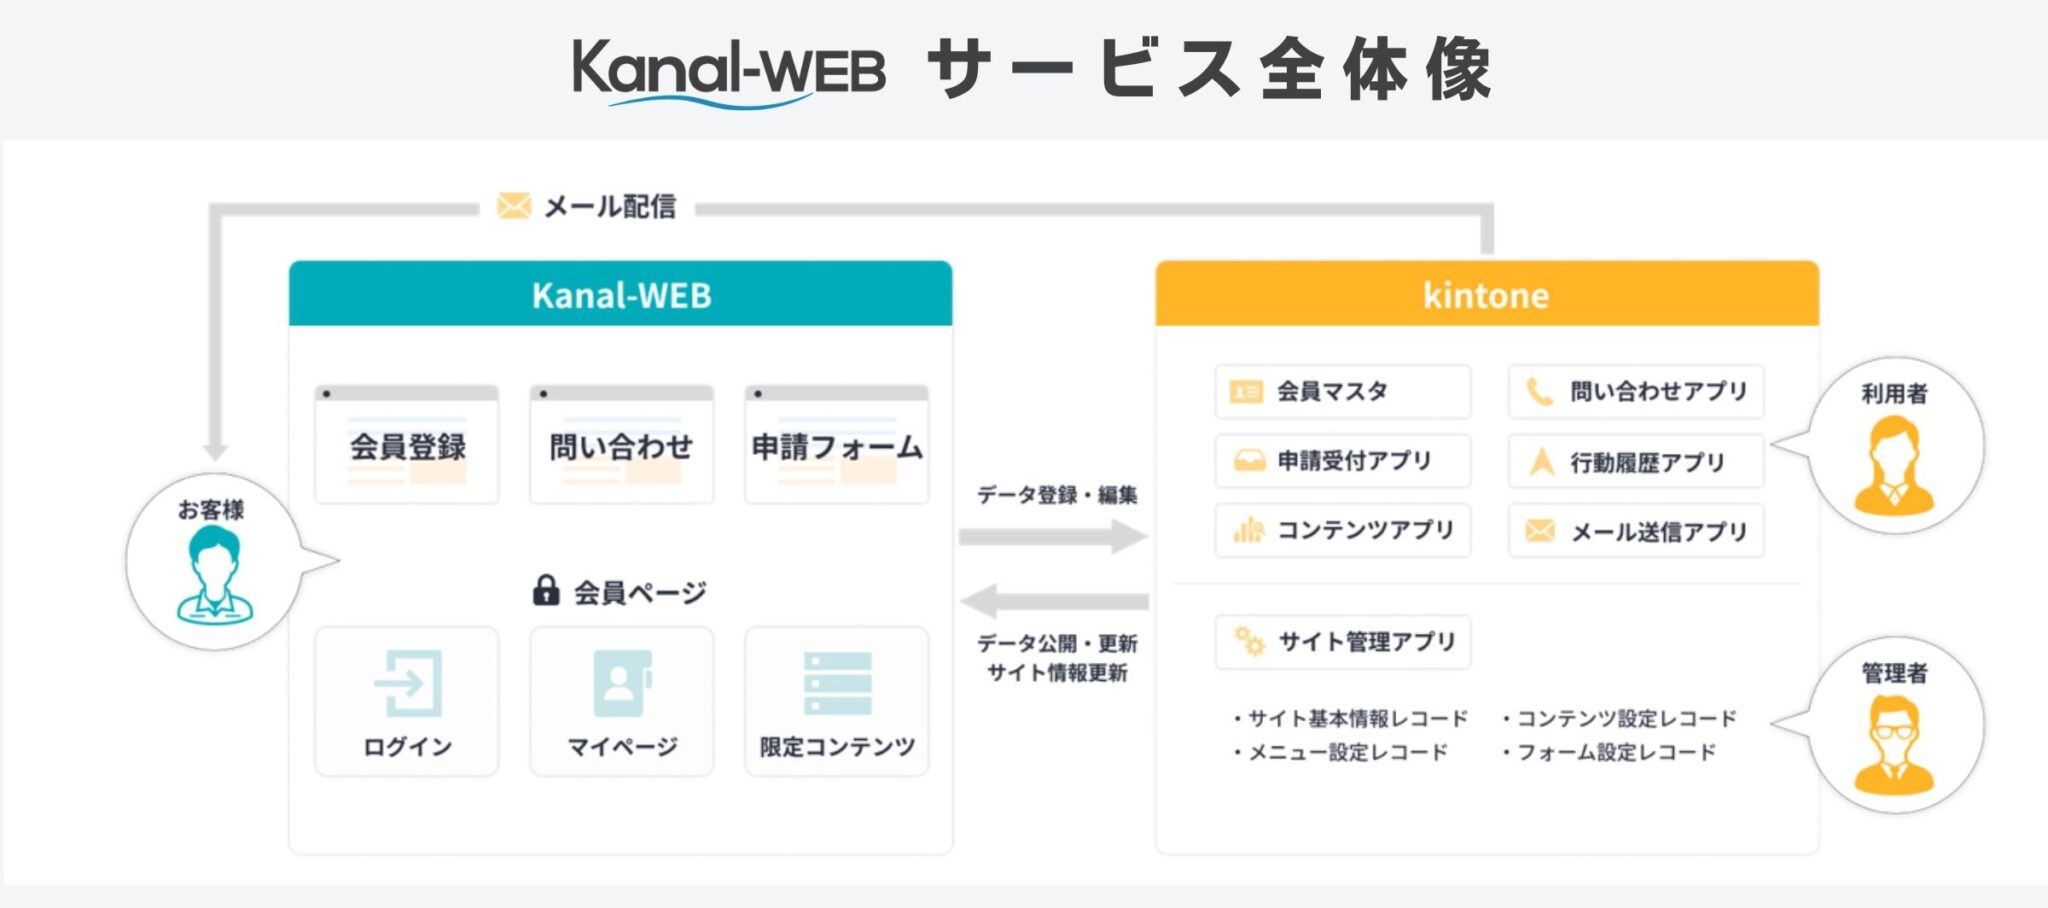 Kanal-WEB kintone 全体図　マイページ